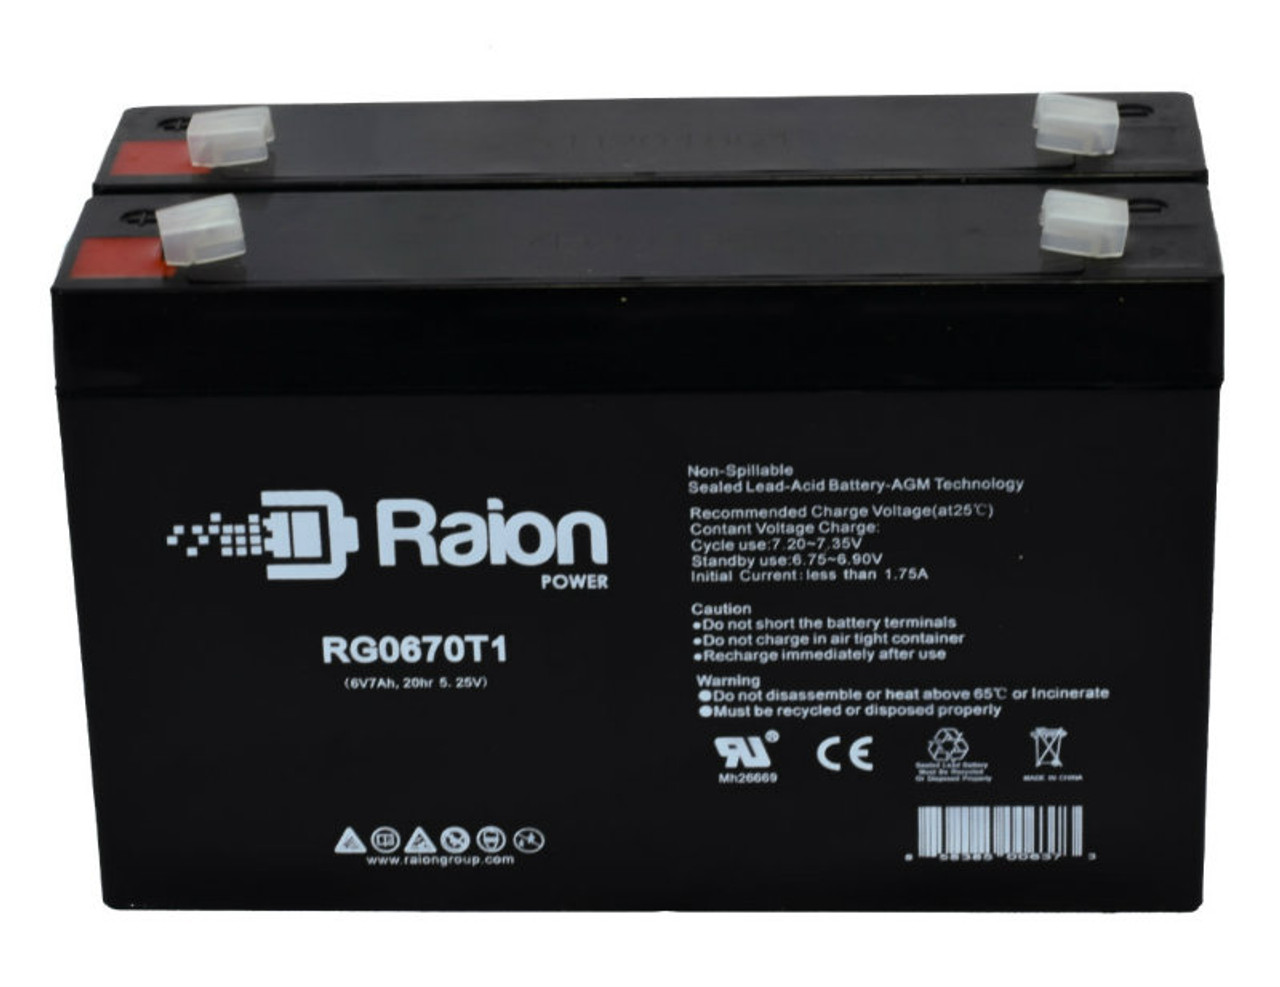 Raion Power RG0670T1 6V 7Ah Replacement Emergency Light Battery for Sonnenschein 6V5 - 2 Pack